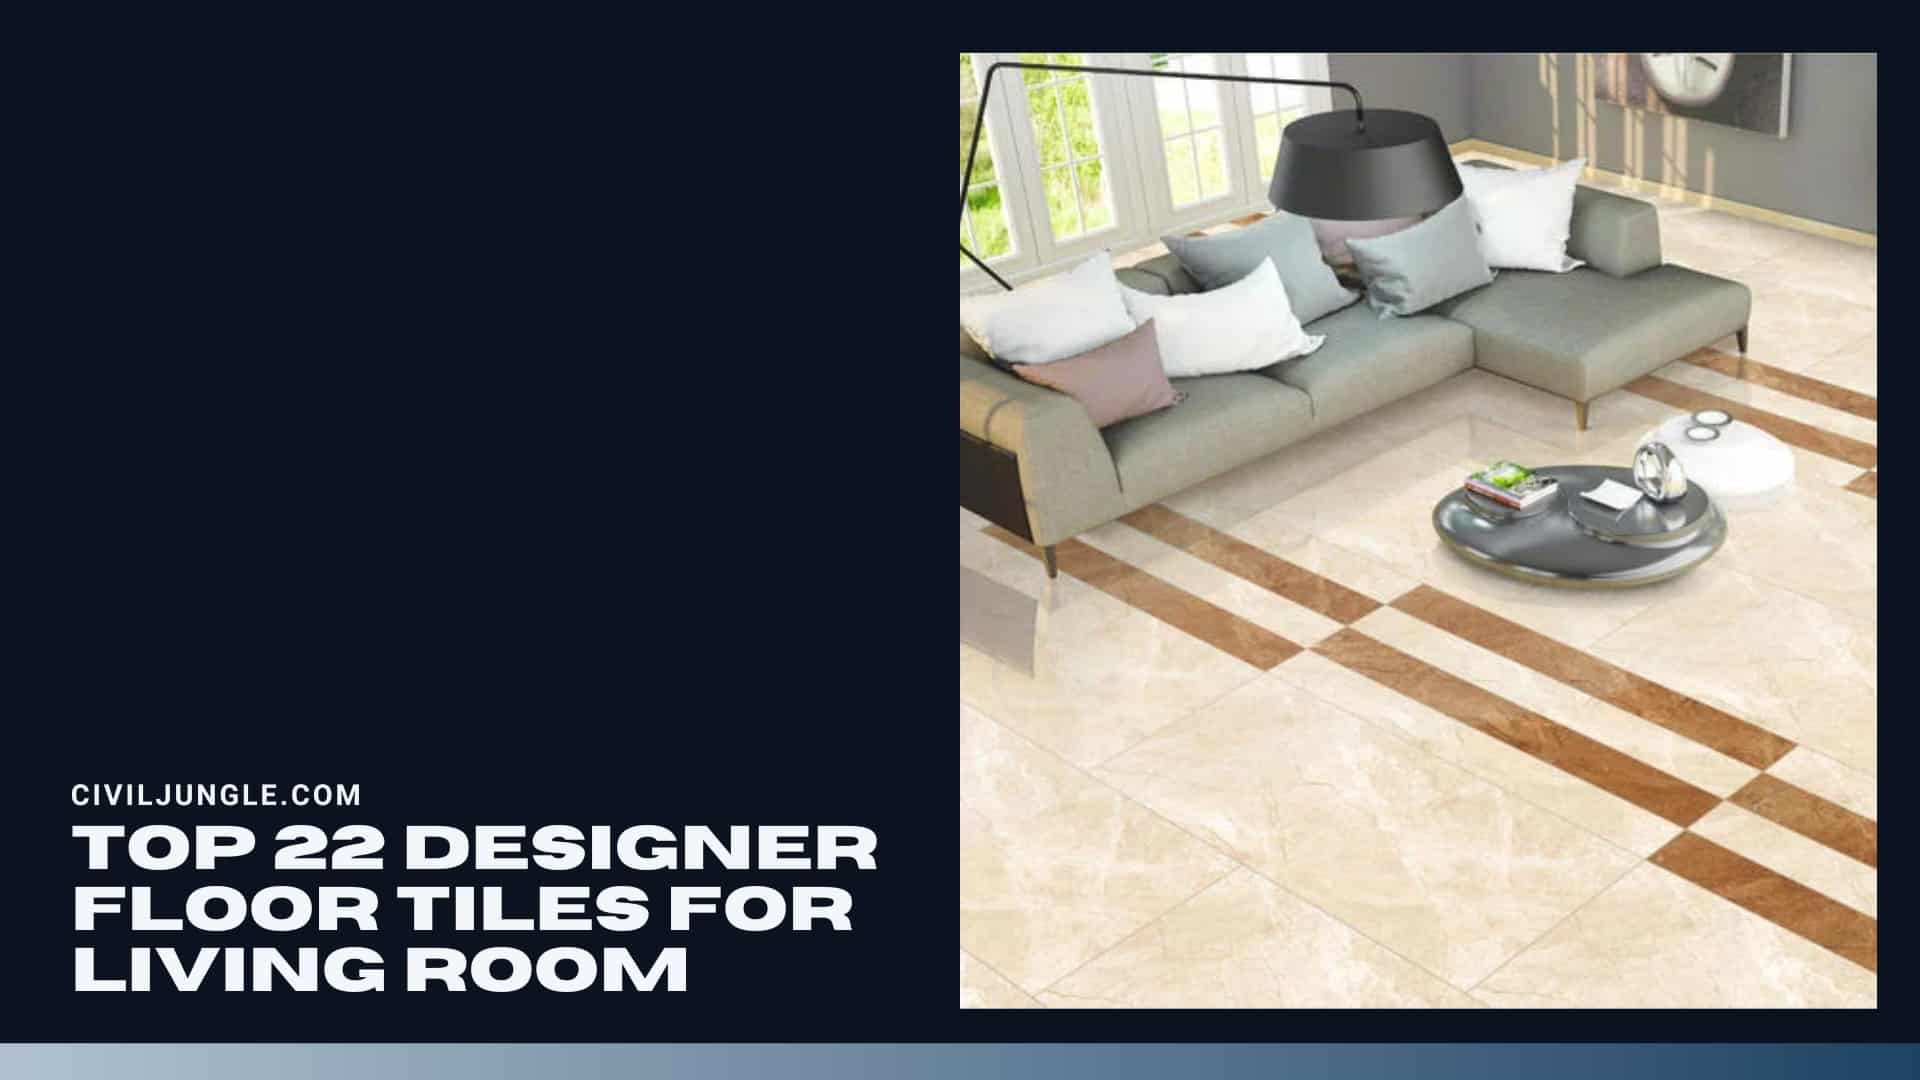 Top 22 Designer Floor Tiles for Living Room